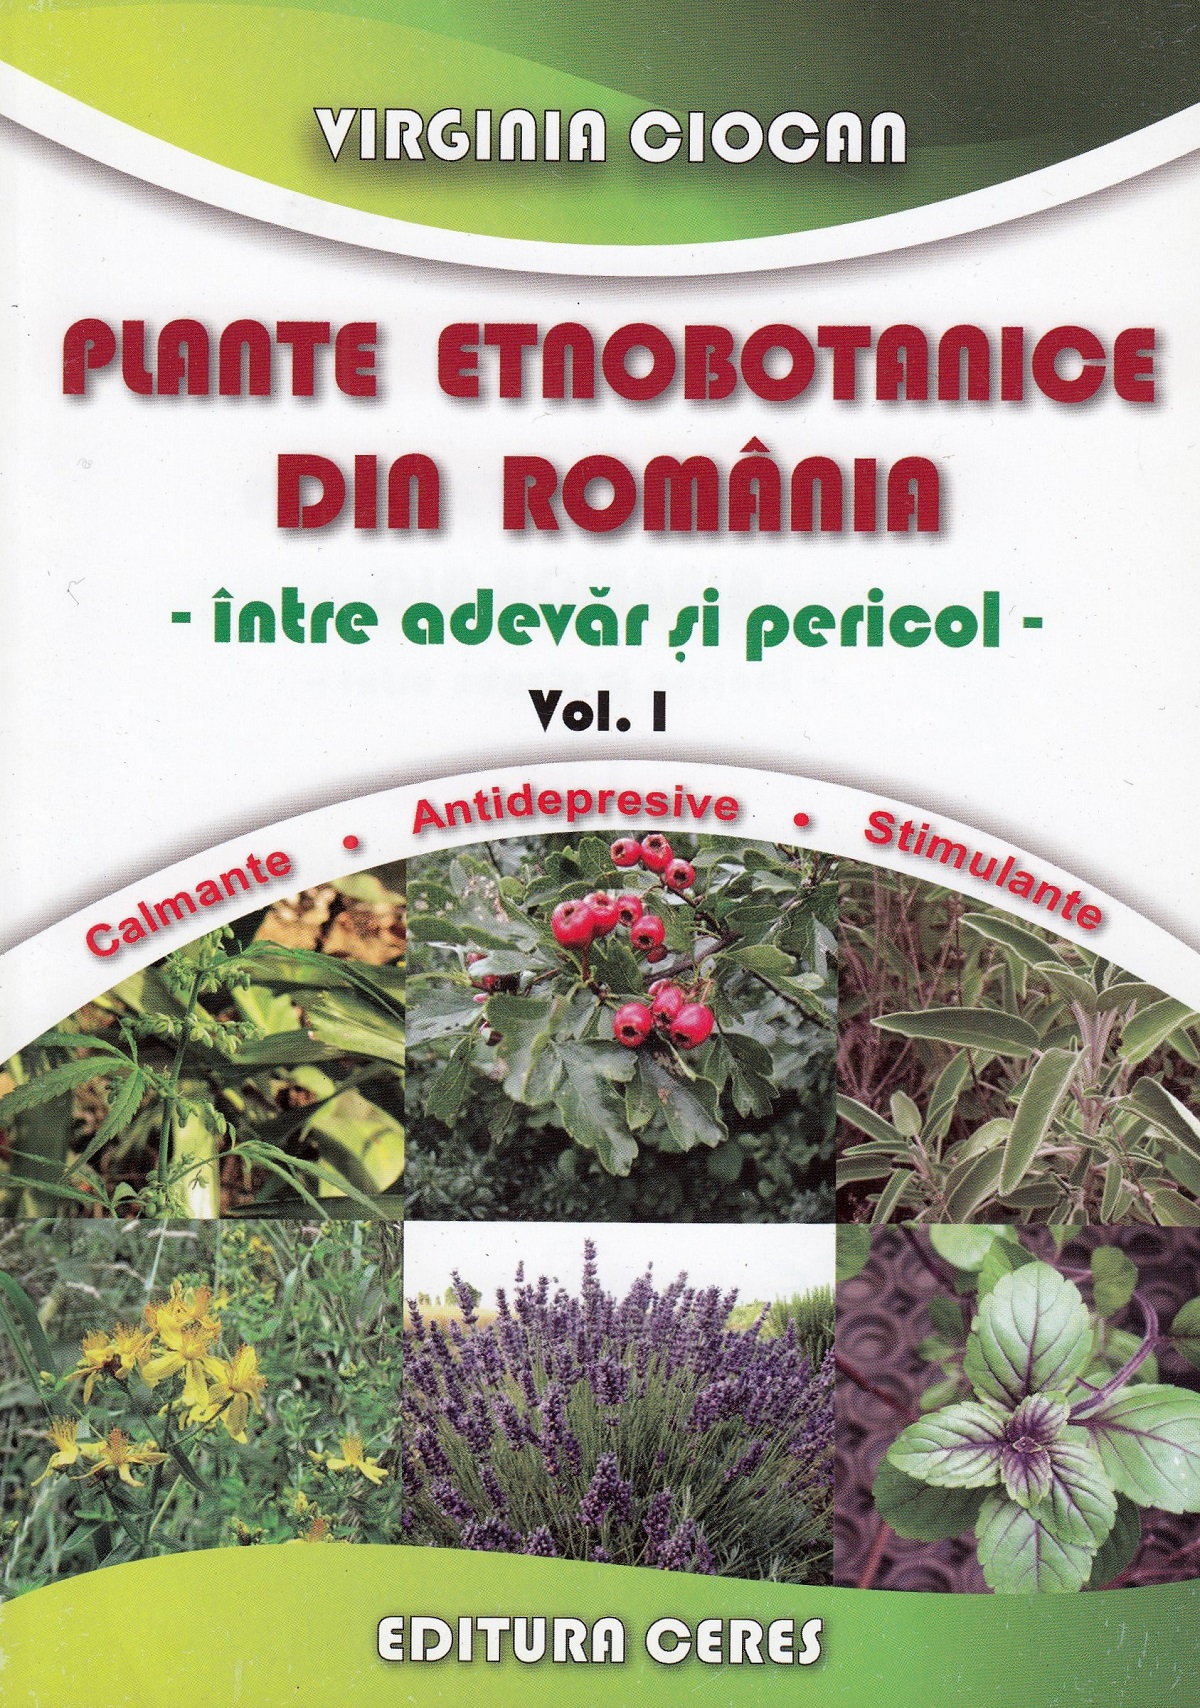 Plante etnobotanice din Romania Vol. 1 - Virginia Ciocan